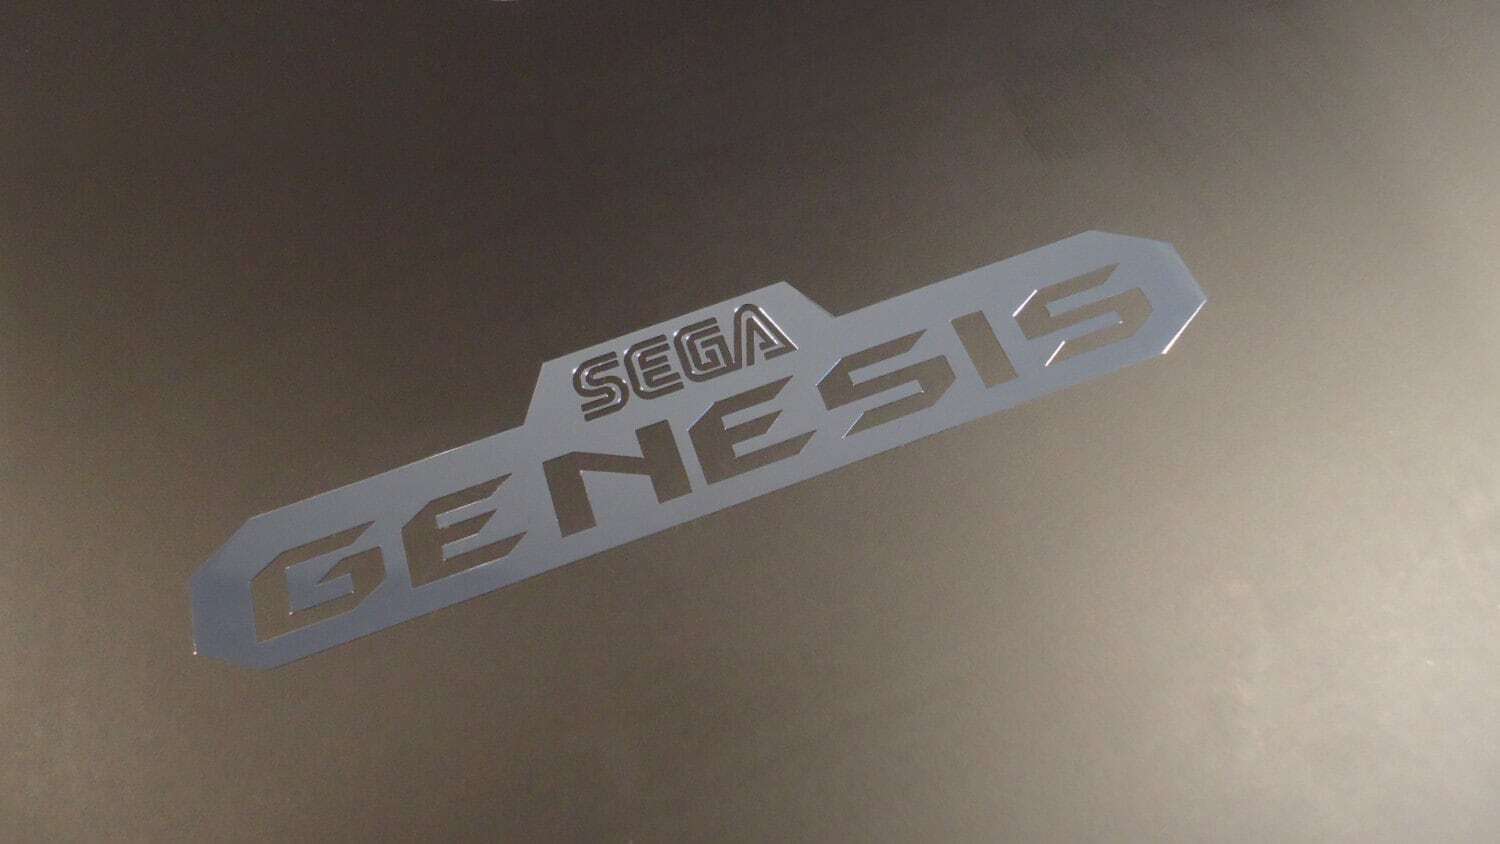 Sega Genesis Label / Aufkleber / Sticker / Badge / Logo 10,1 x 2,2cm [267]